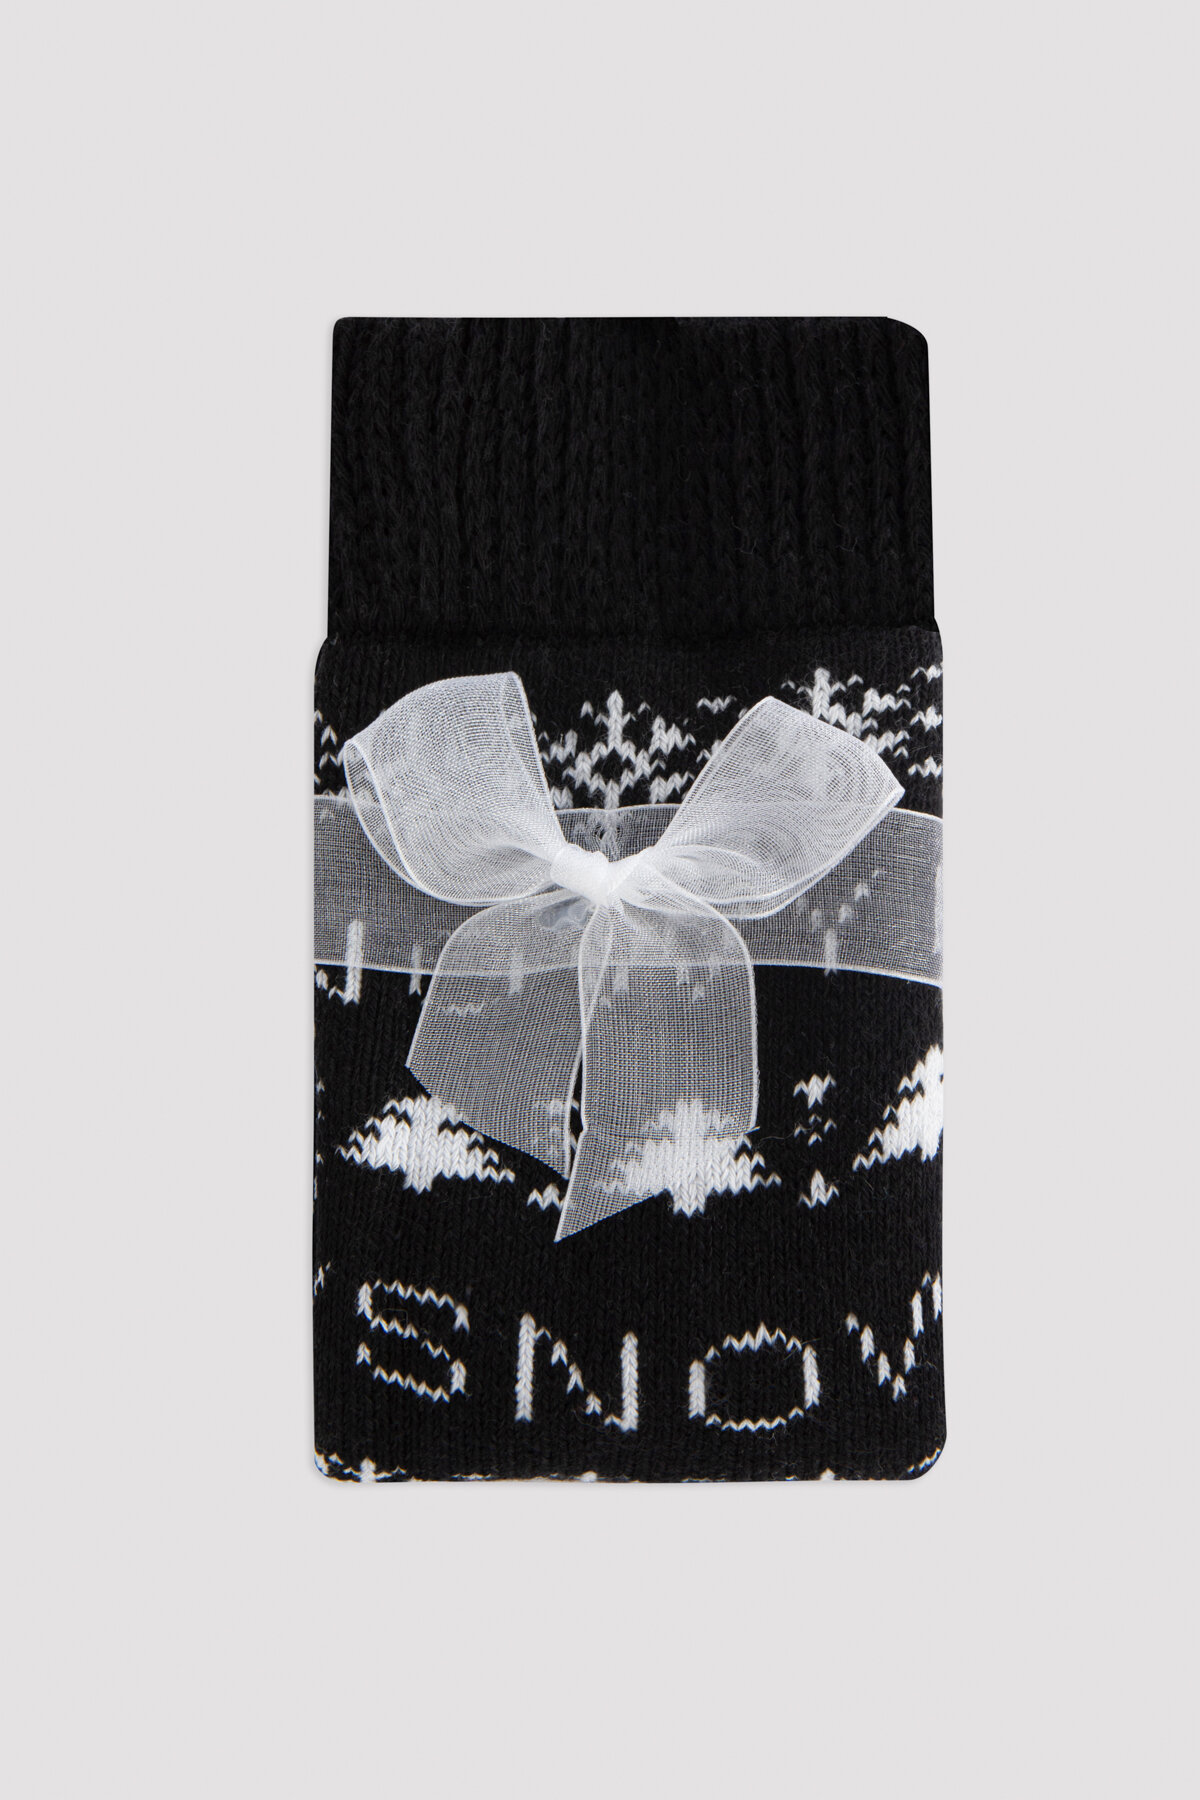 Gift Snow sokne MIX